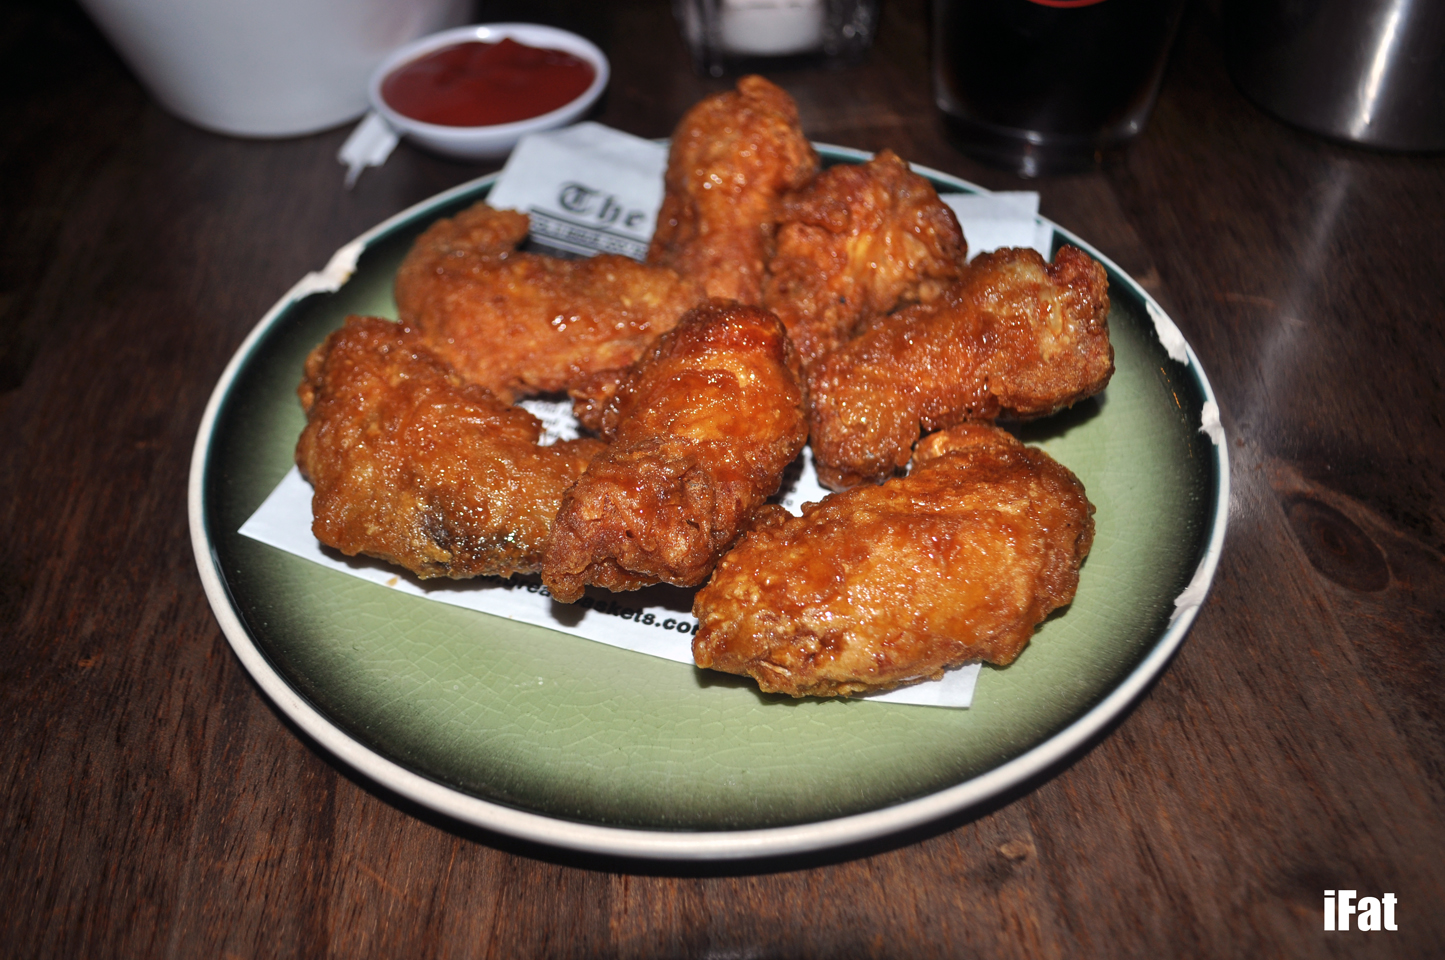 Fried chicken at Bonchon, New York